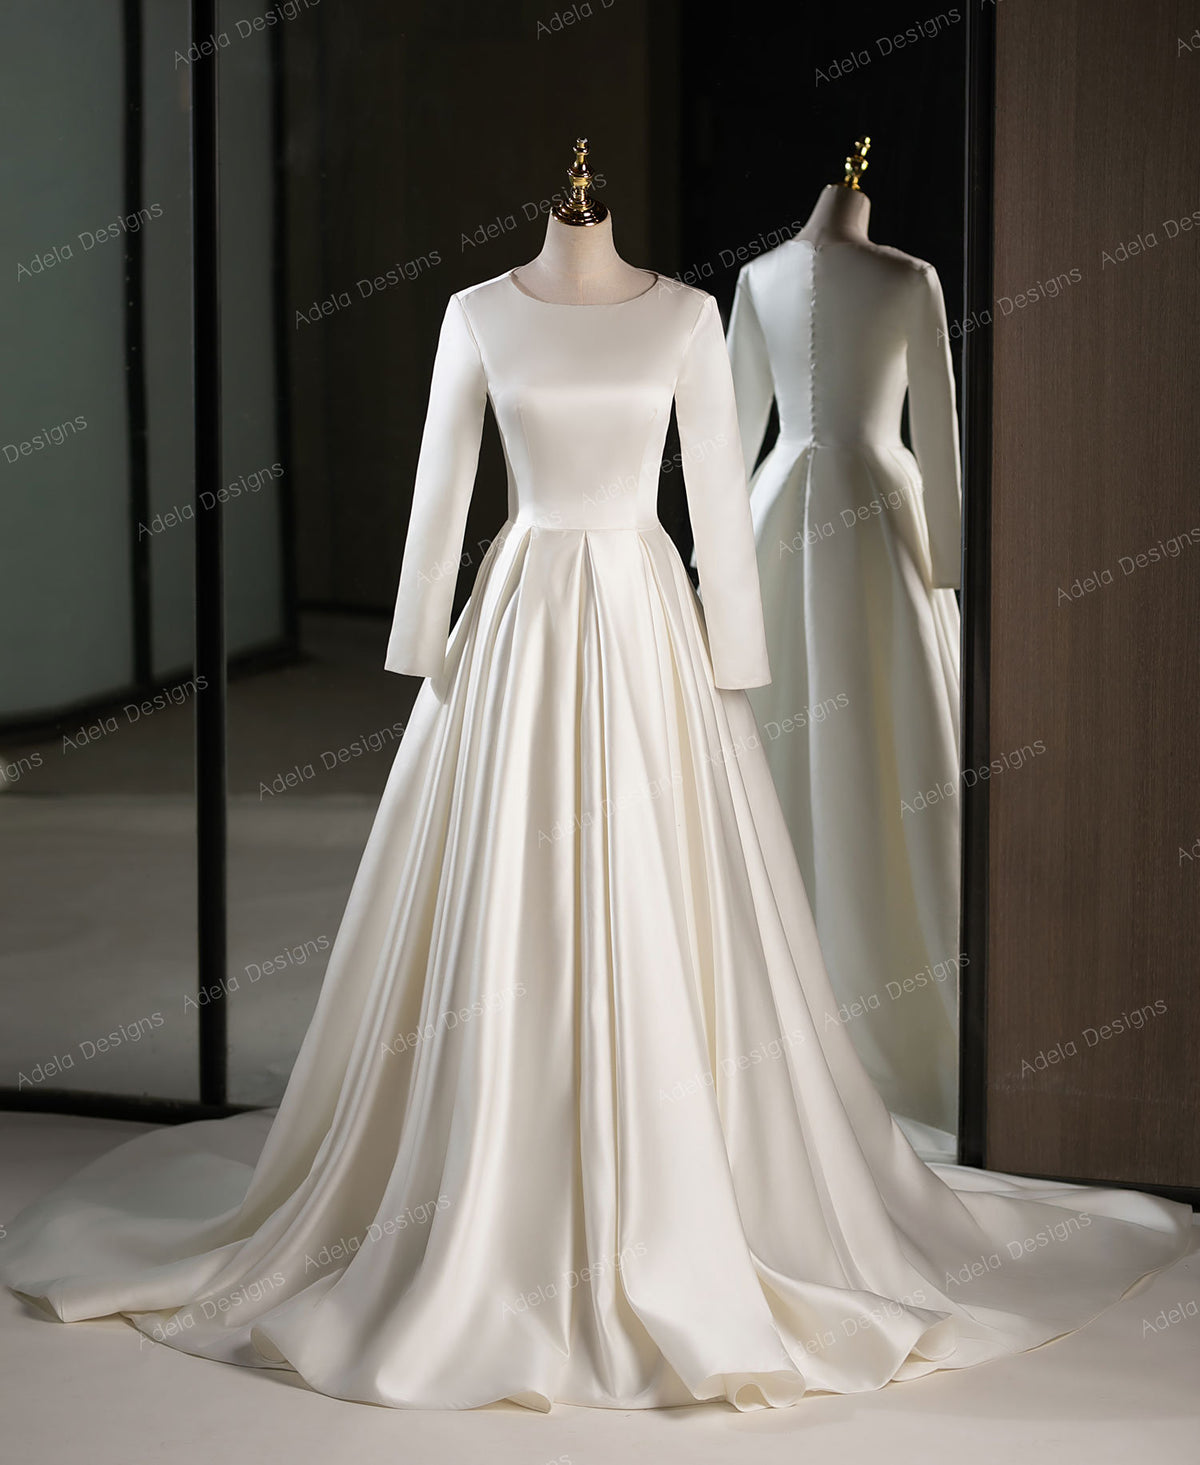 Modest Minimalist Long Sleeve Bridal Gown Aline Wedding Dress Aline Silhouette High Neckline Covered Back LDS Simple Satin LDS Button Back